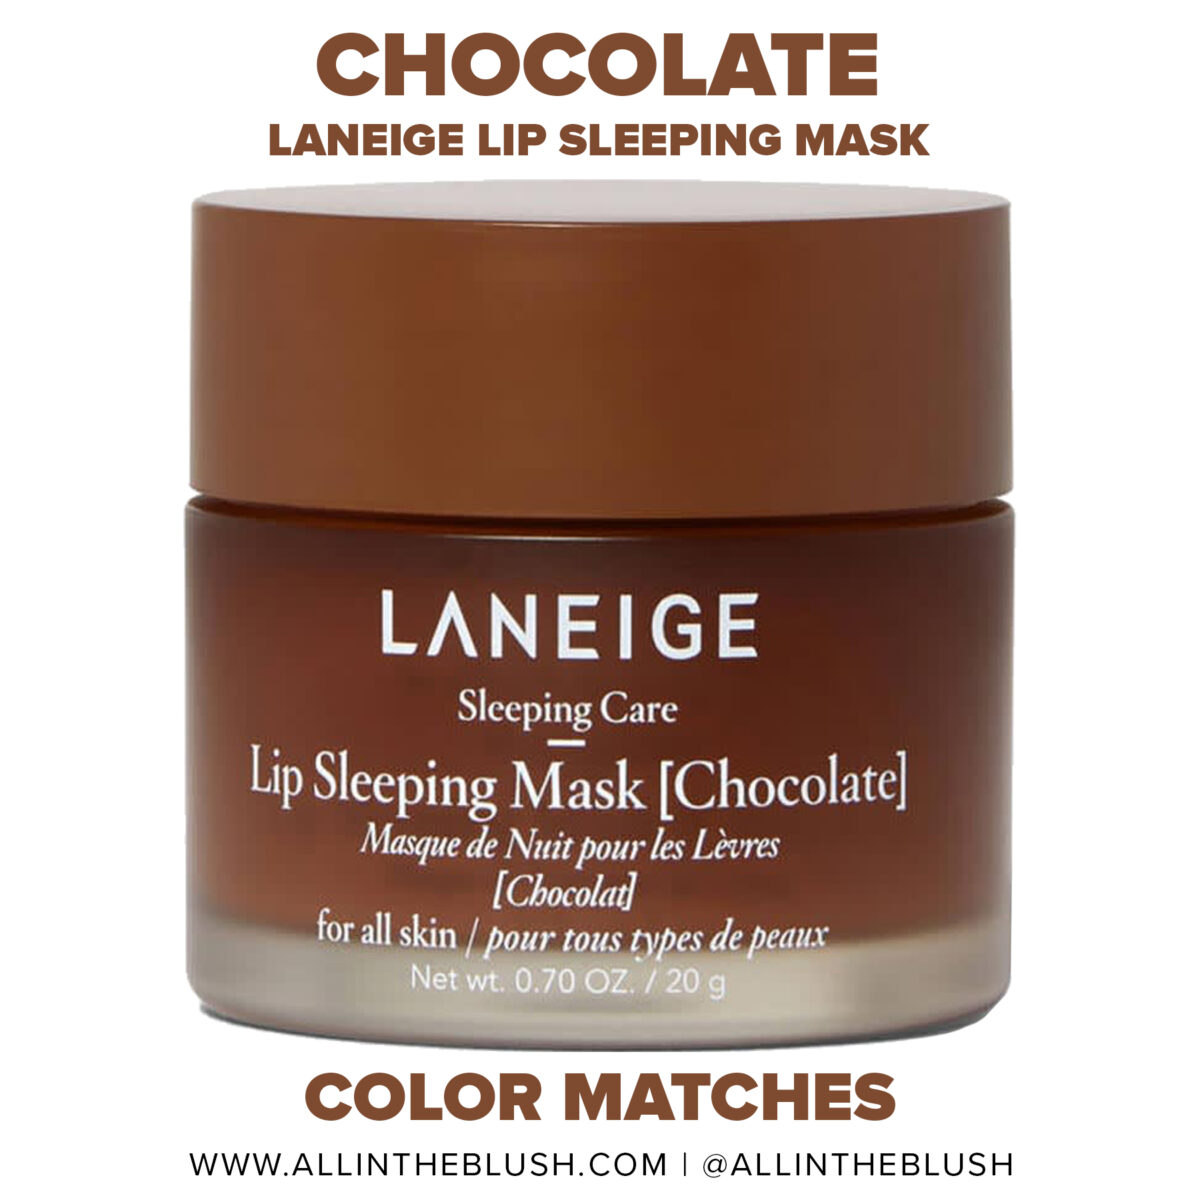 Laneige Chocolate Lip Sleeping Mask Alternatives